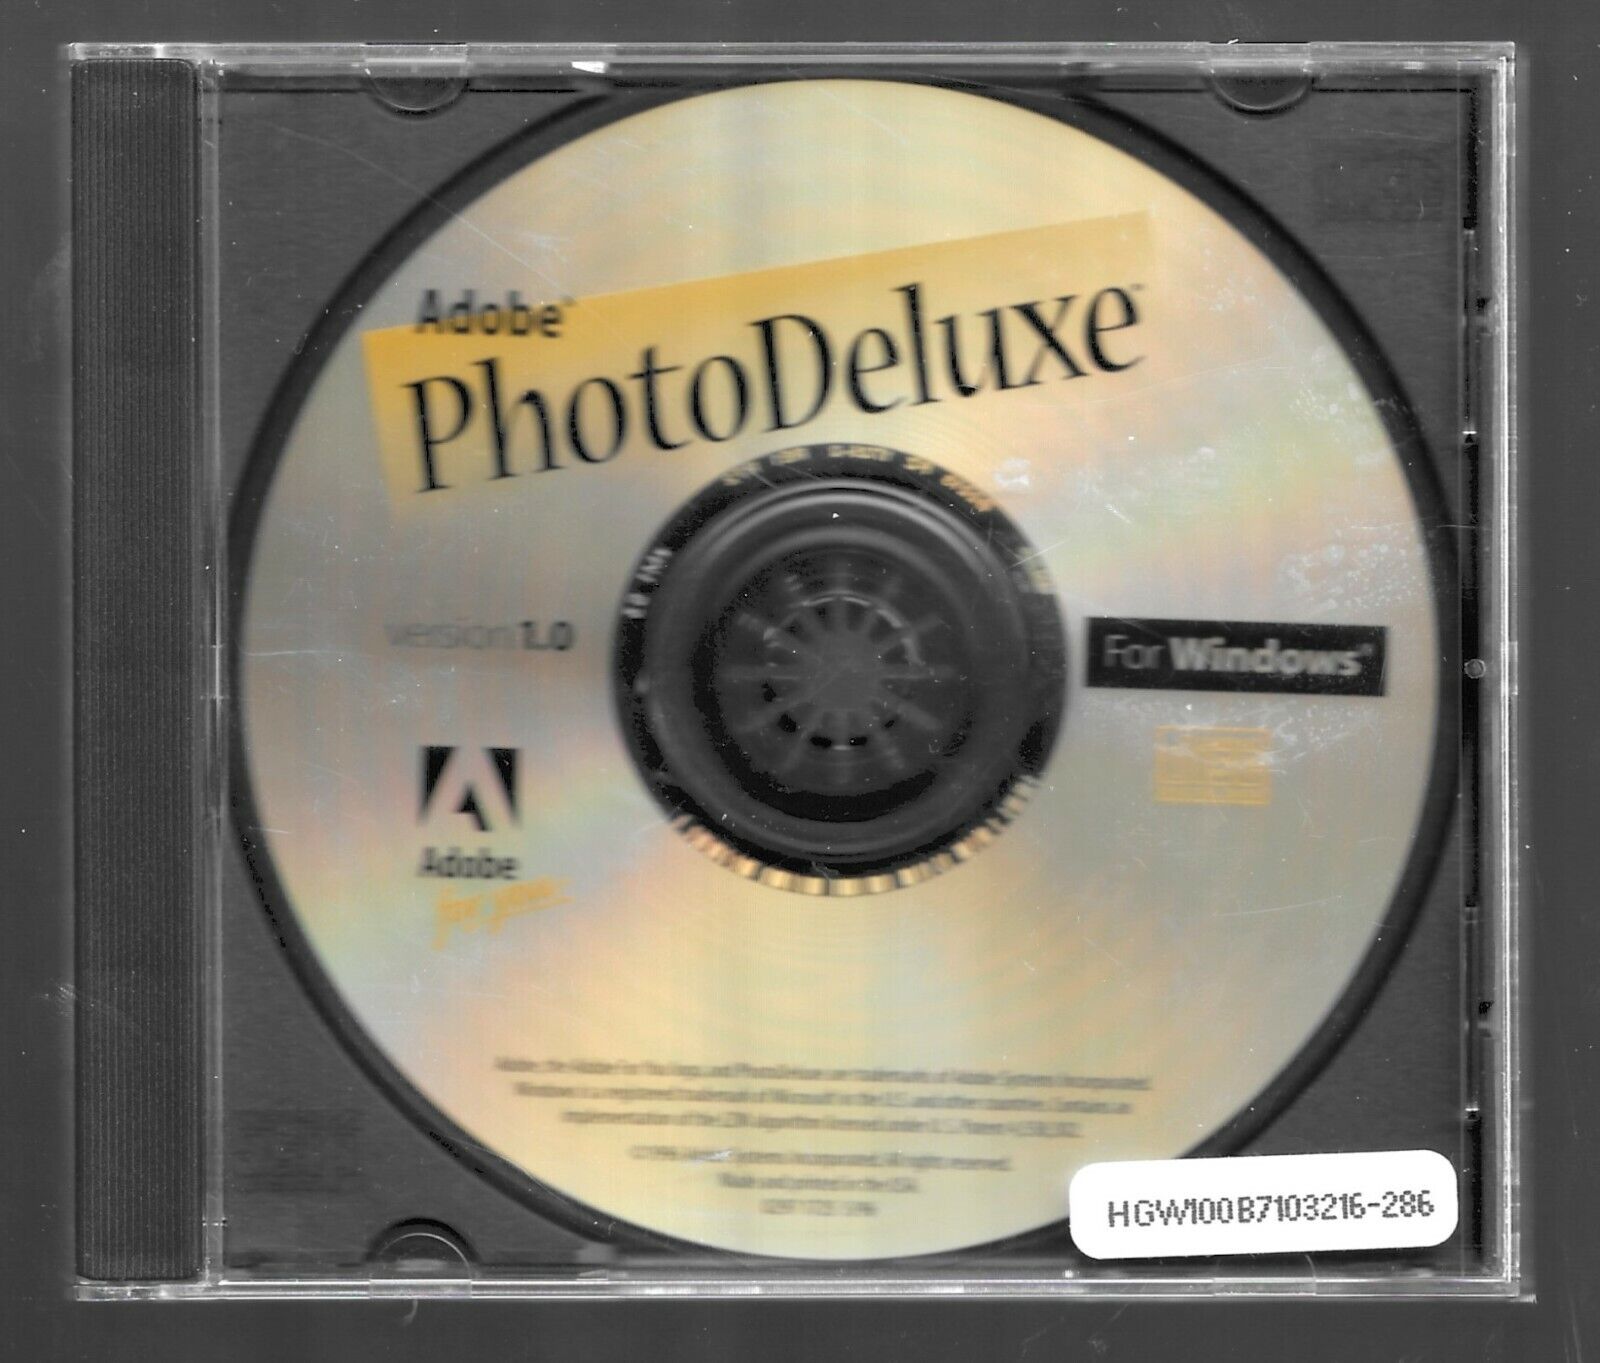 Adobe PhotoDeluxe for Windows - Version 1.0 